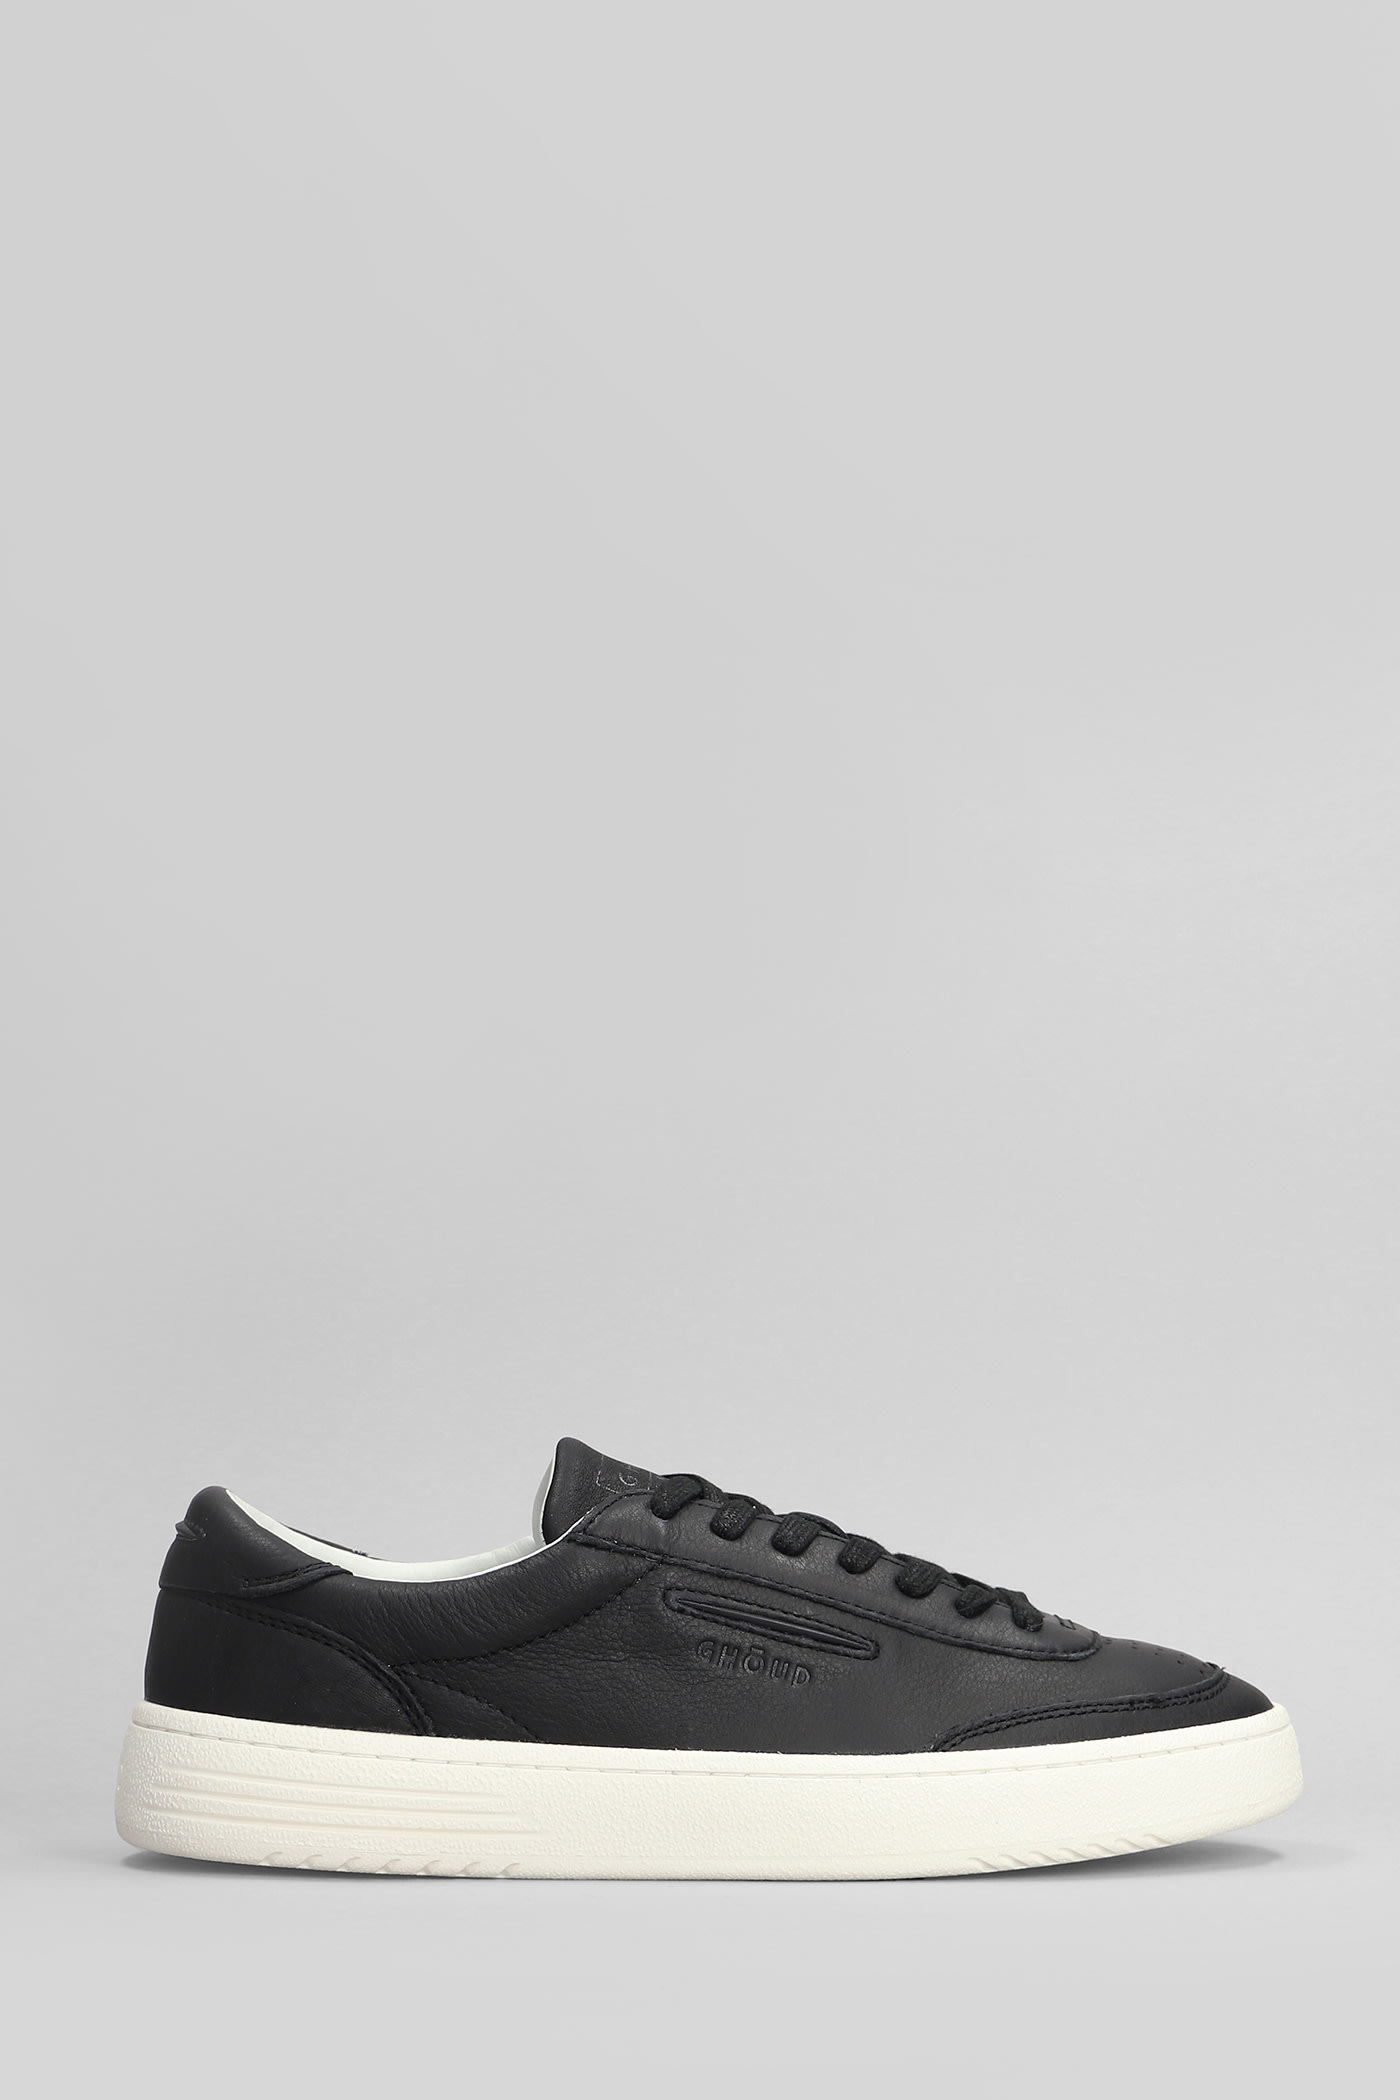 Ghoud Lindo Low Sneakers In Black Leather